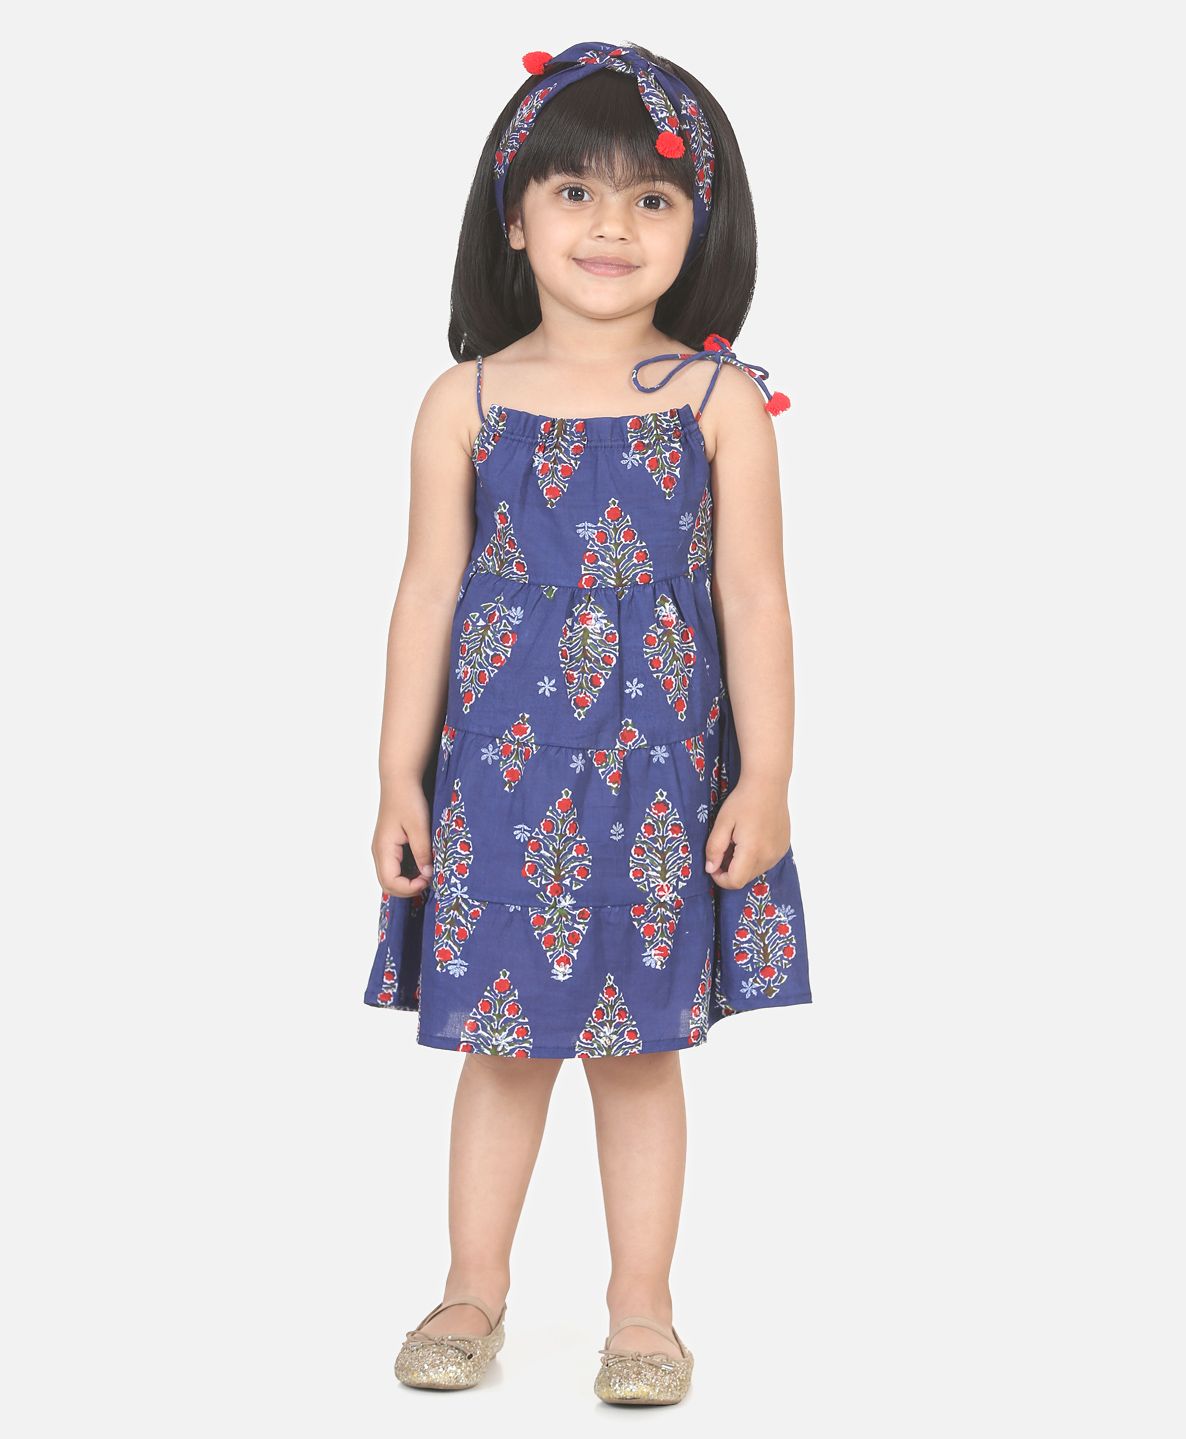 L C Boutique Short Sleeve Dress Infant Toddler Dropped Waist Polka Dot 6M to 5/6 